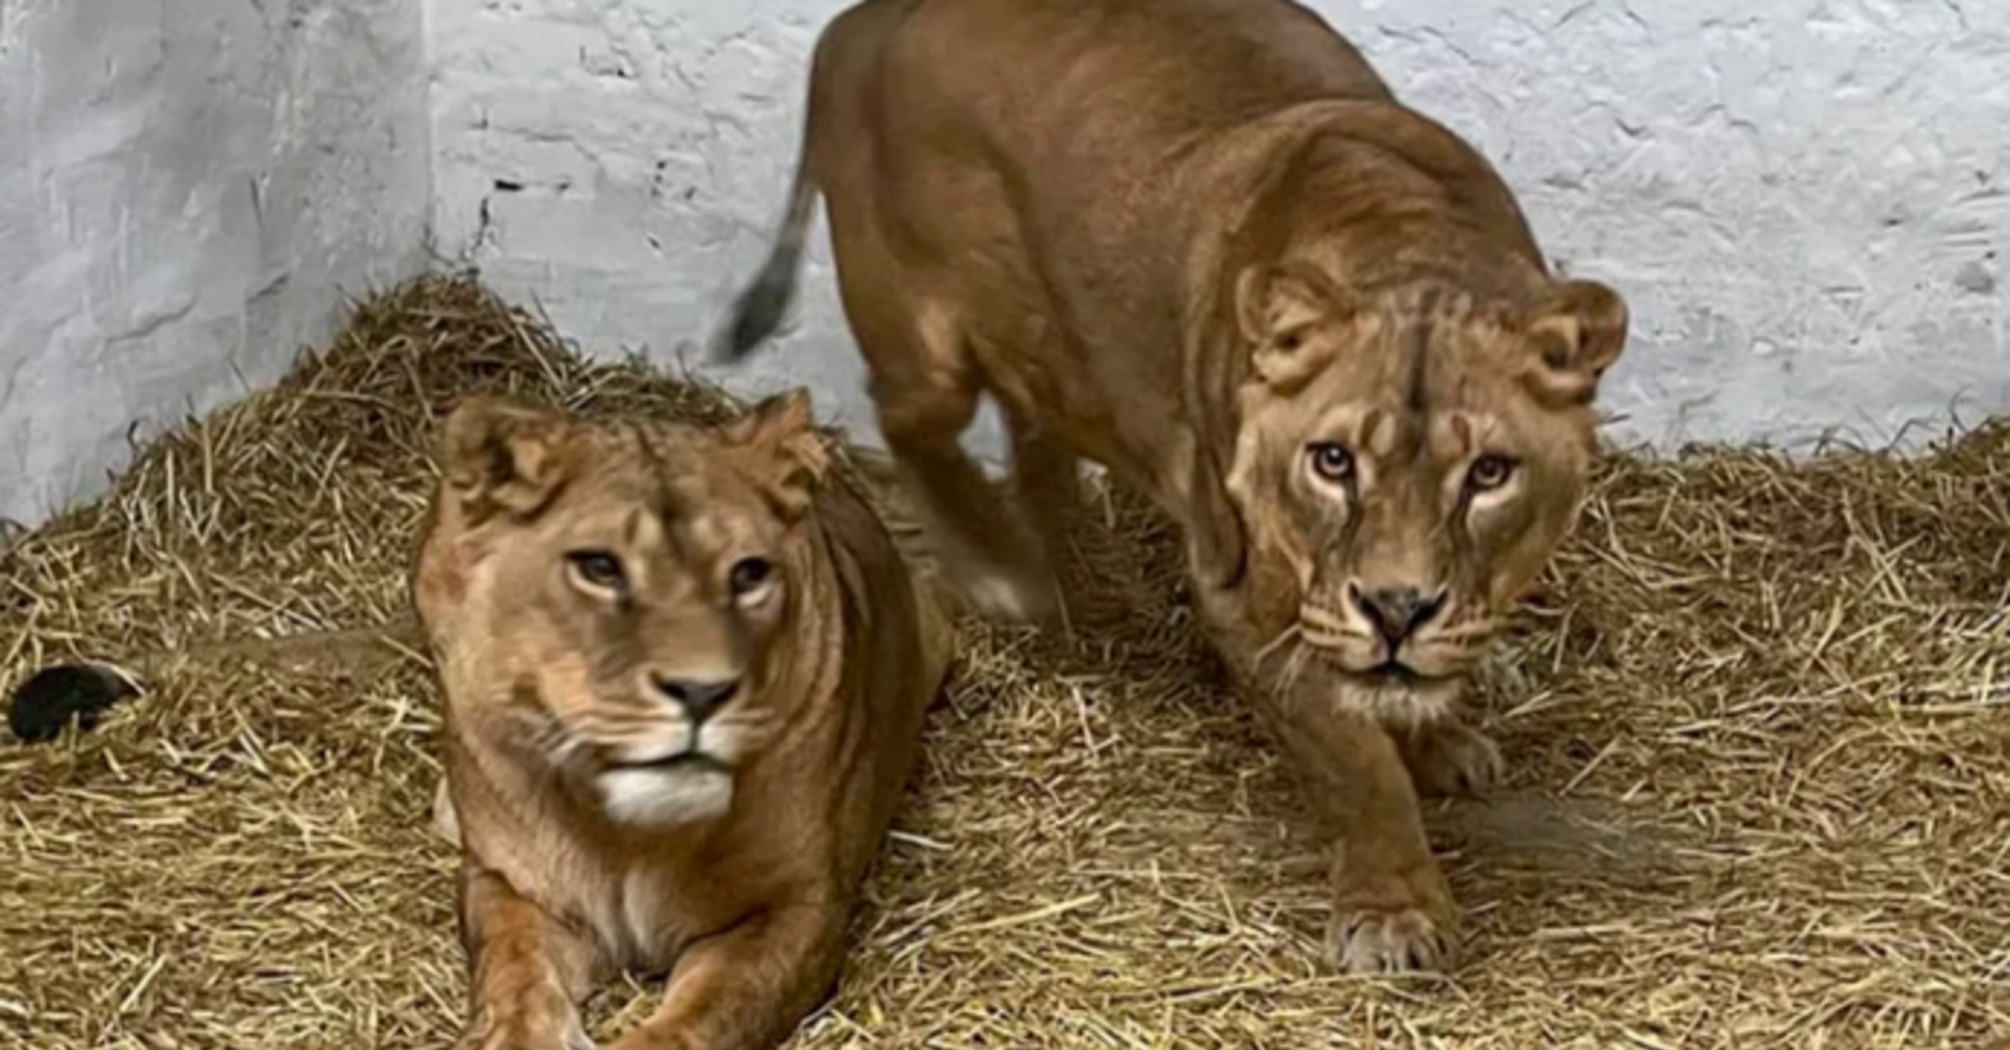 France has sheltered three Ukrainian lions